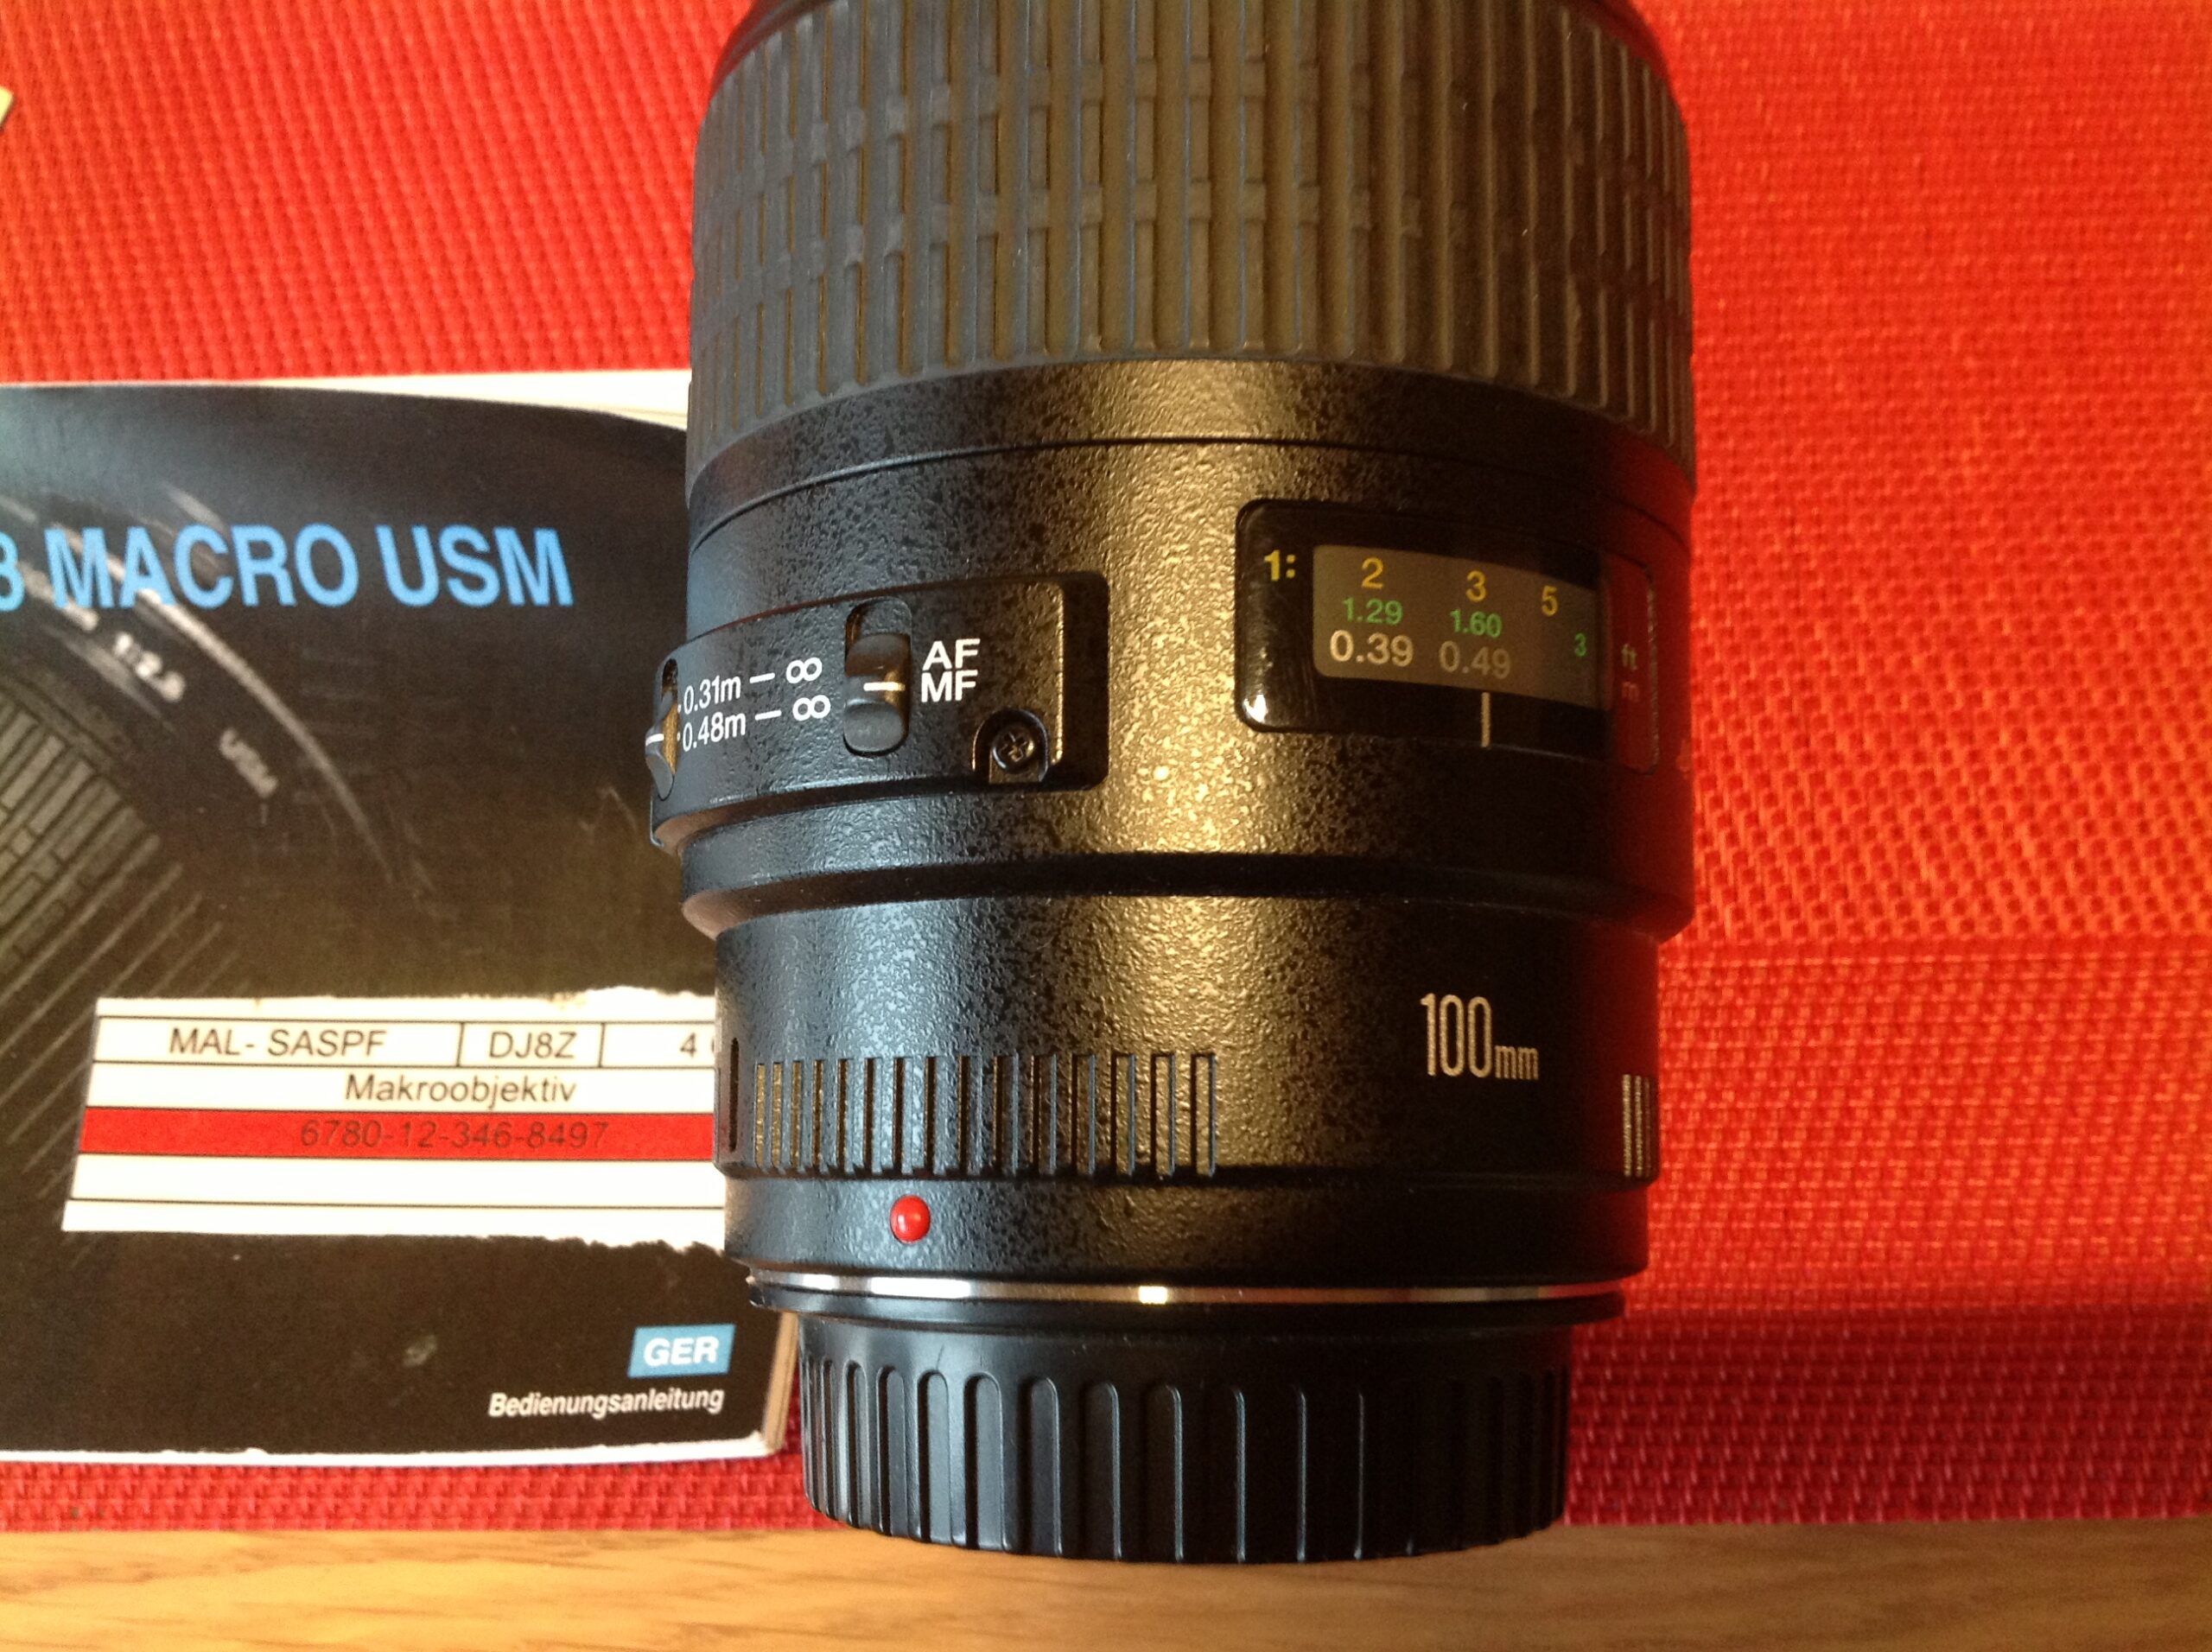 Canon EF Lens EF 100 mm f/2.8 Macro USM